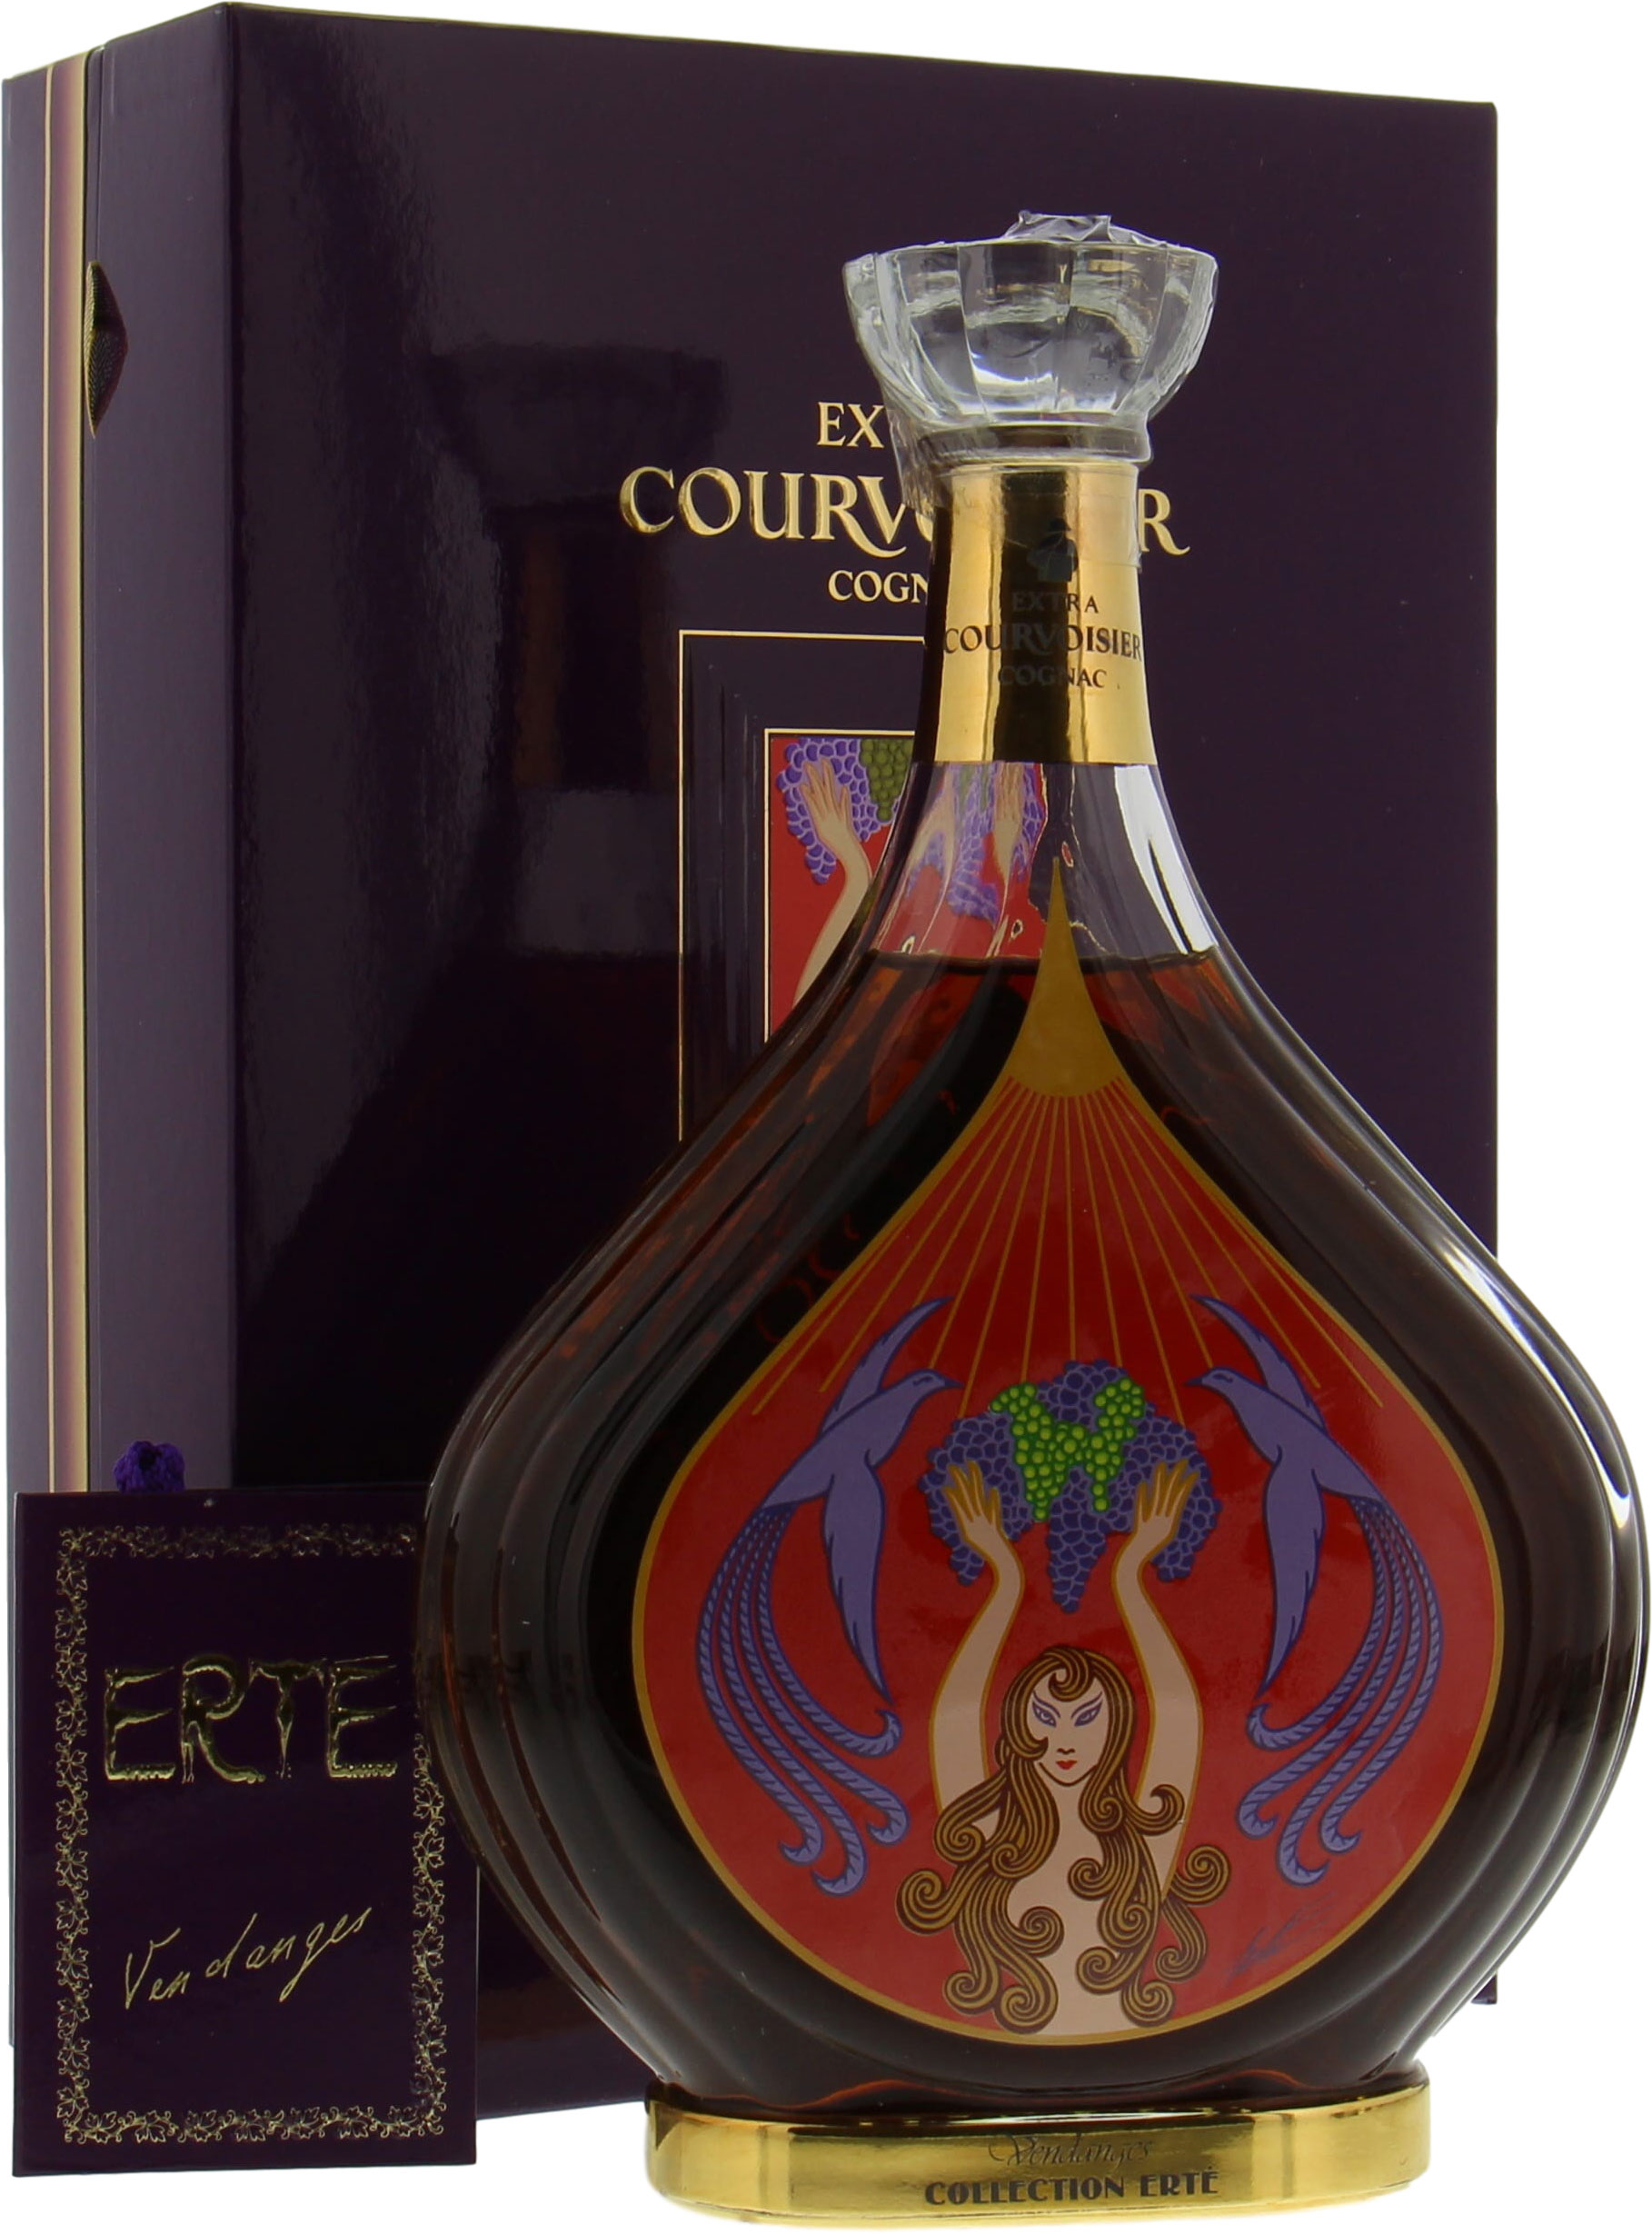 Courvoisier Cognac - Erte no 2 NV From Original Wooden Case